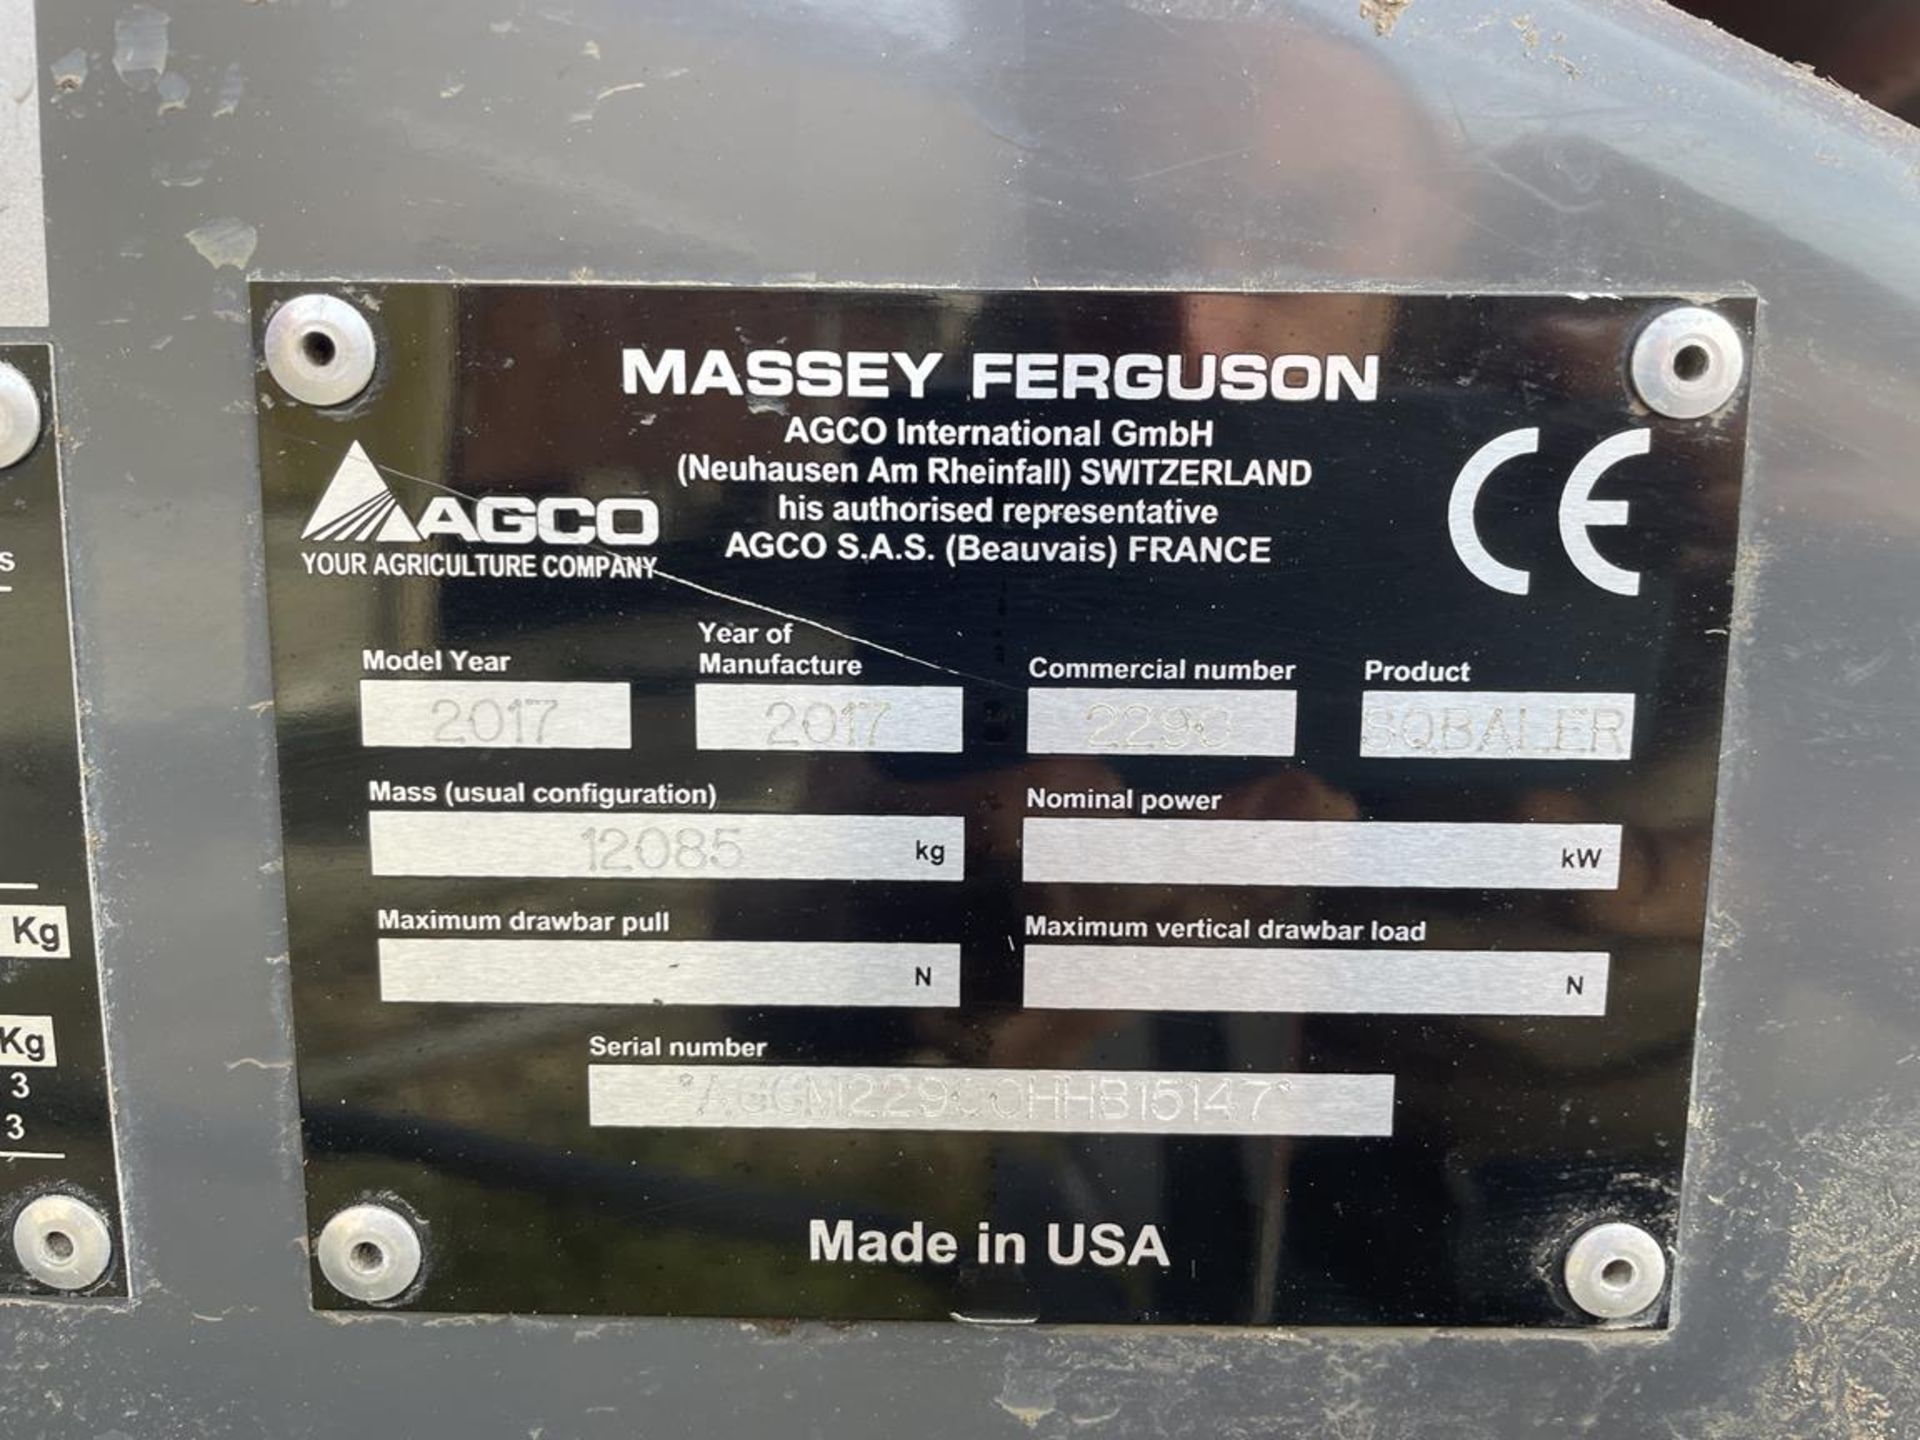 2017 Massey Ferguson MF2290 Model SQ Twin Axle Baler, S/No. AGCM22900HHB15147, 29,670 bales, - Image 13 of 14